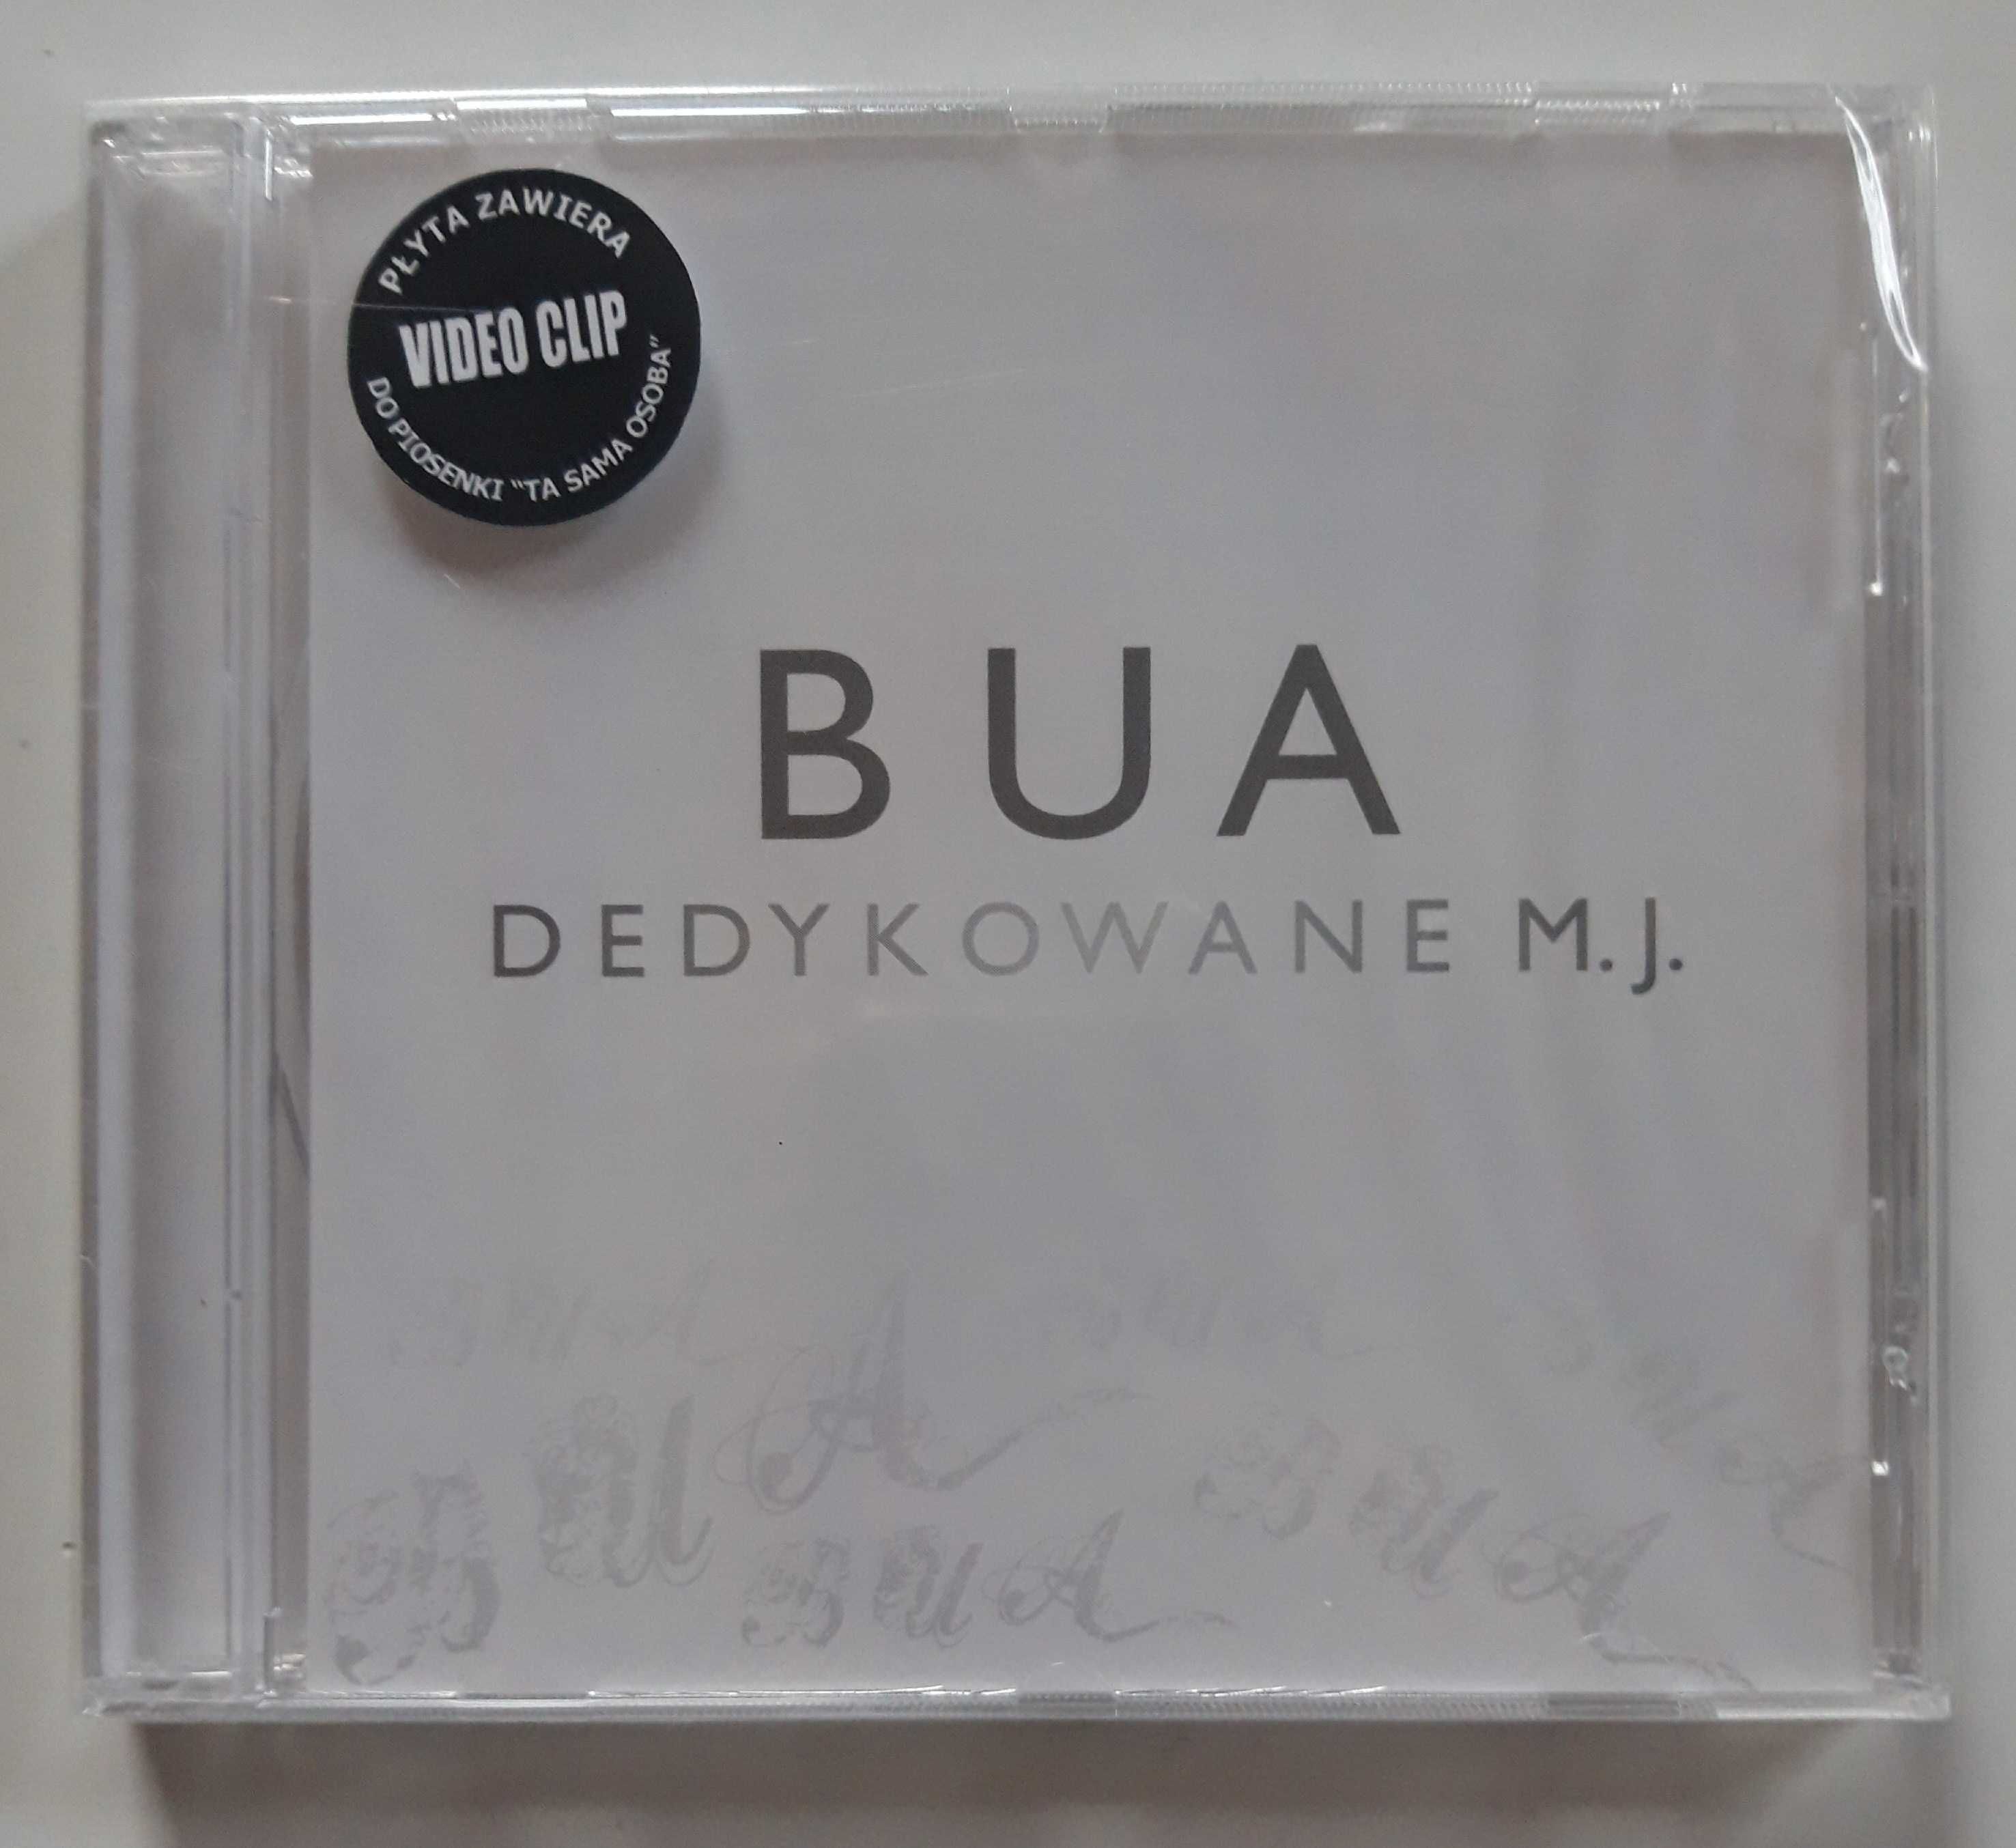 BuA - Dedykowane M.J. CD 2015 feat. Grem, Mc Robak, Kamol